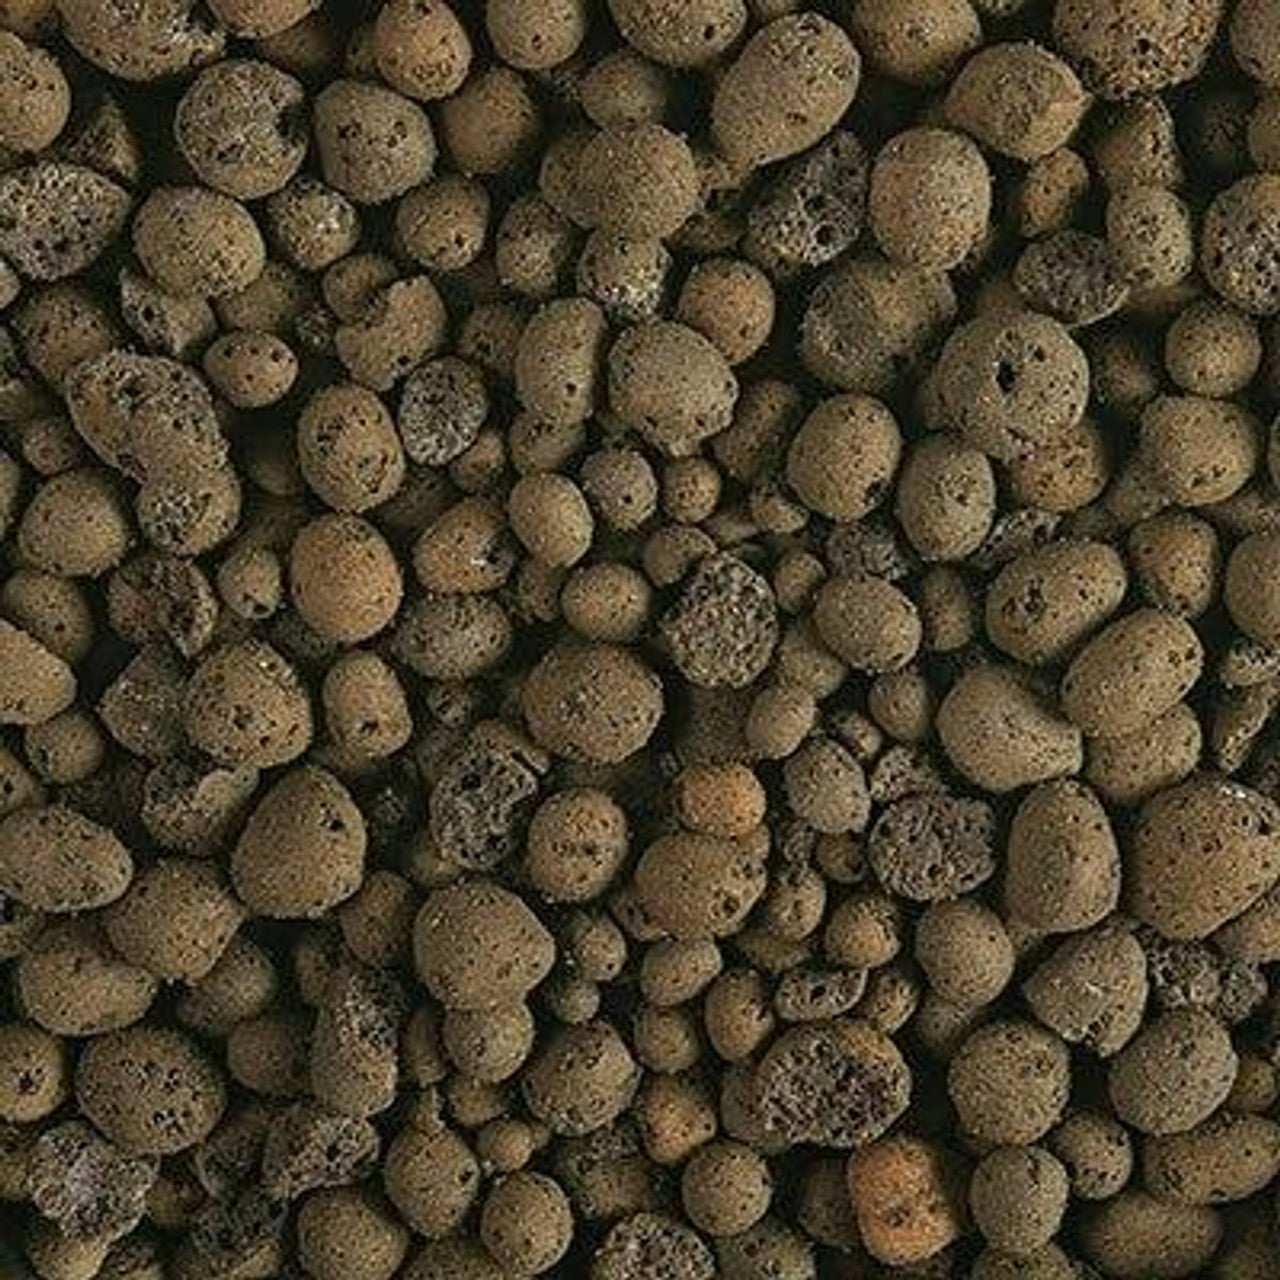 Clay Pebbles (Clay Balls/LECA/Expanded Clay Pebbles)